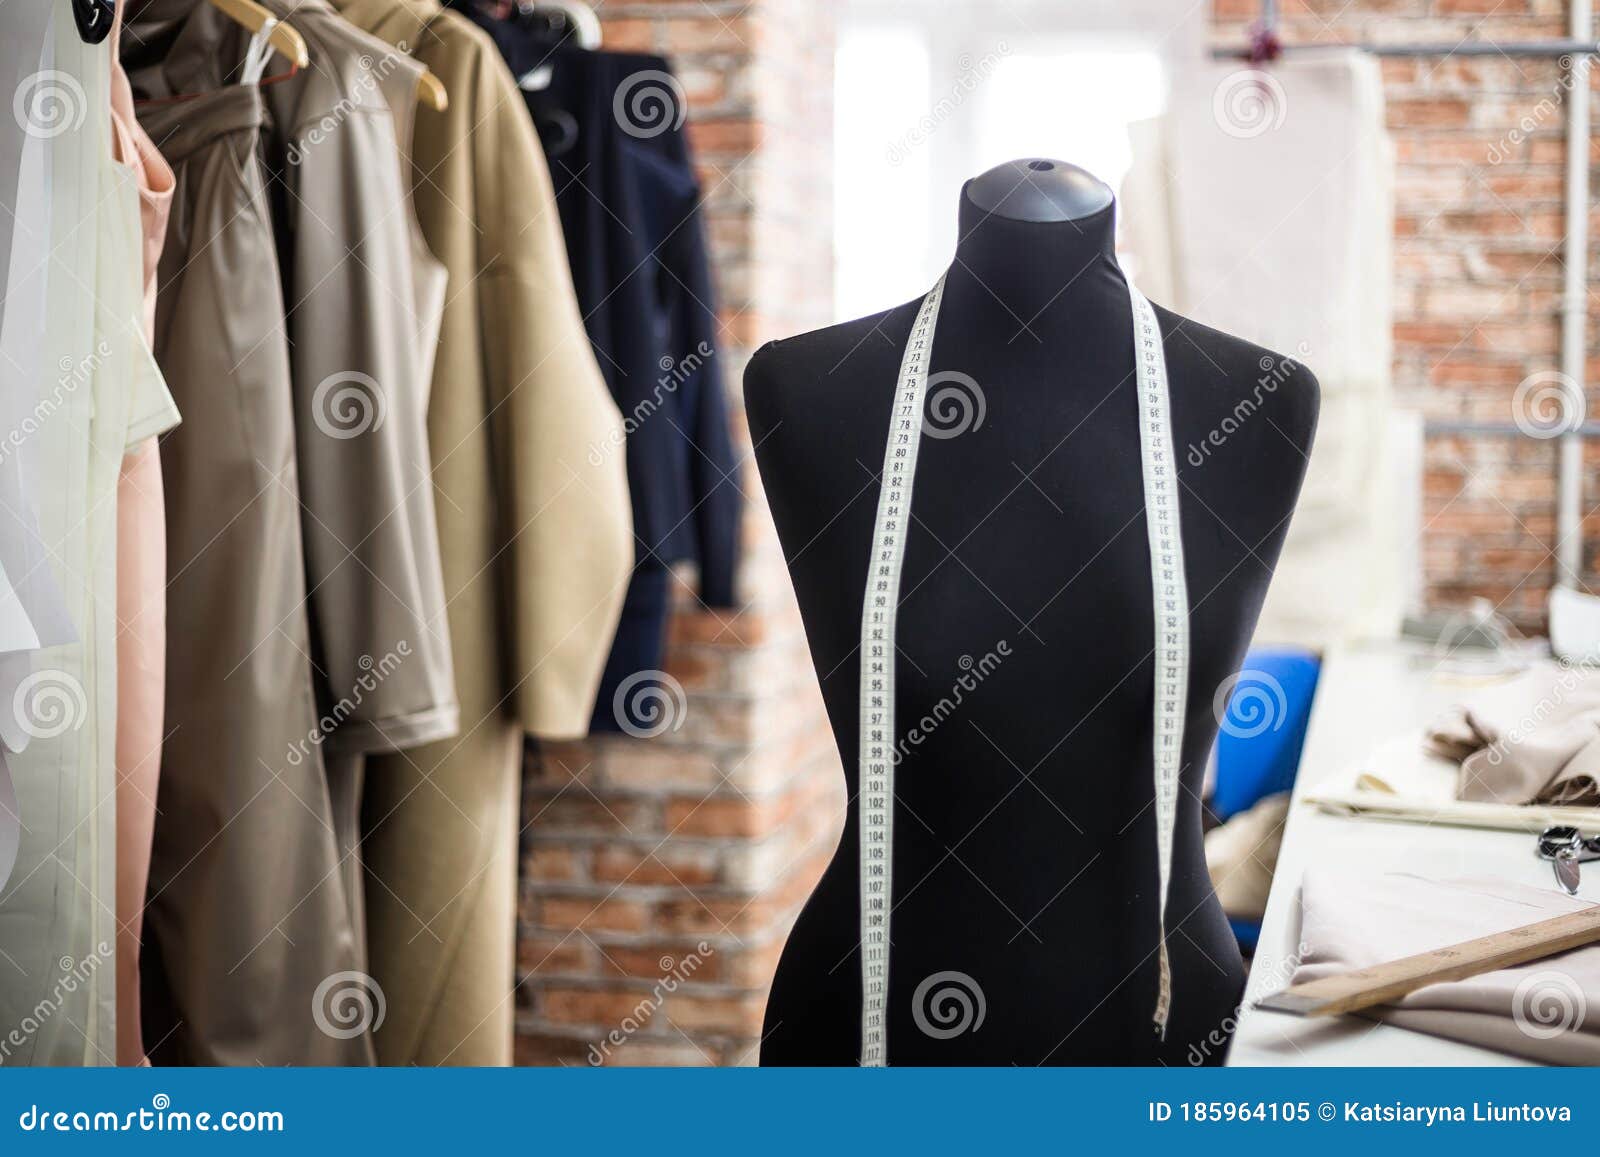 Design Studio Concept. Mannequin Dummy, Clothes Hangers, Dressmaking ...